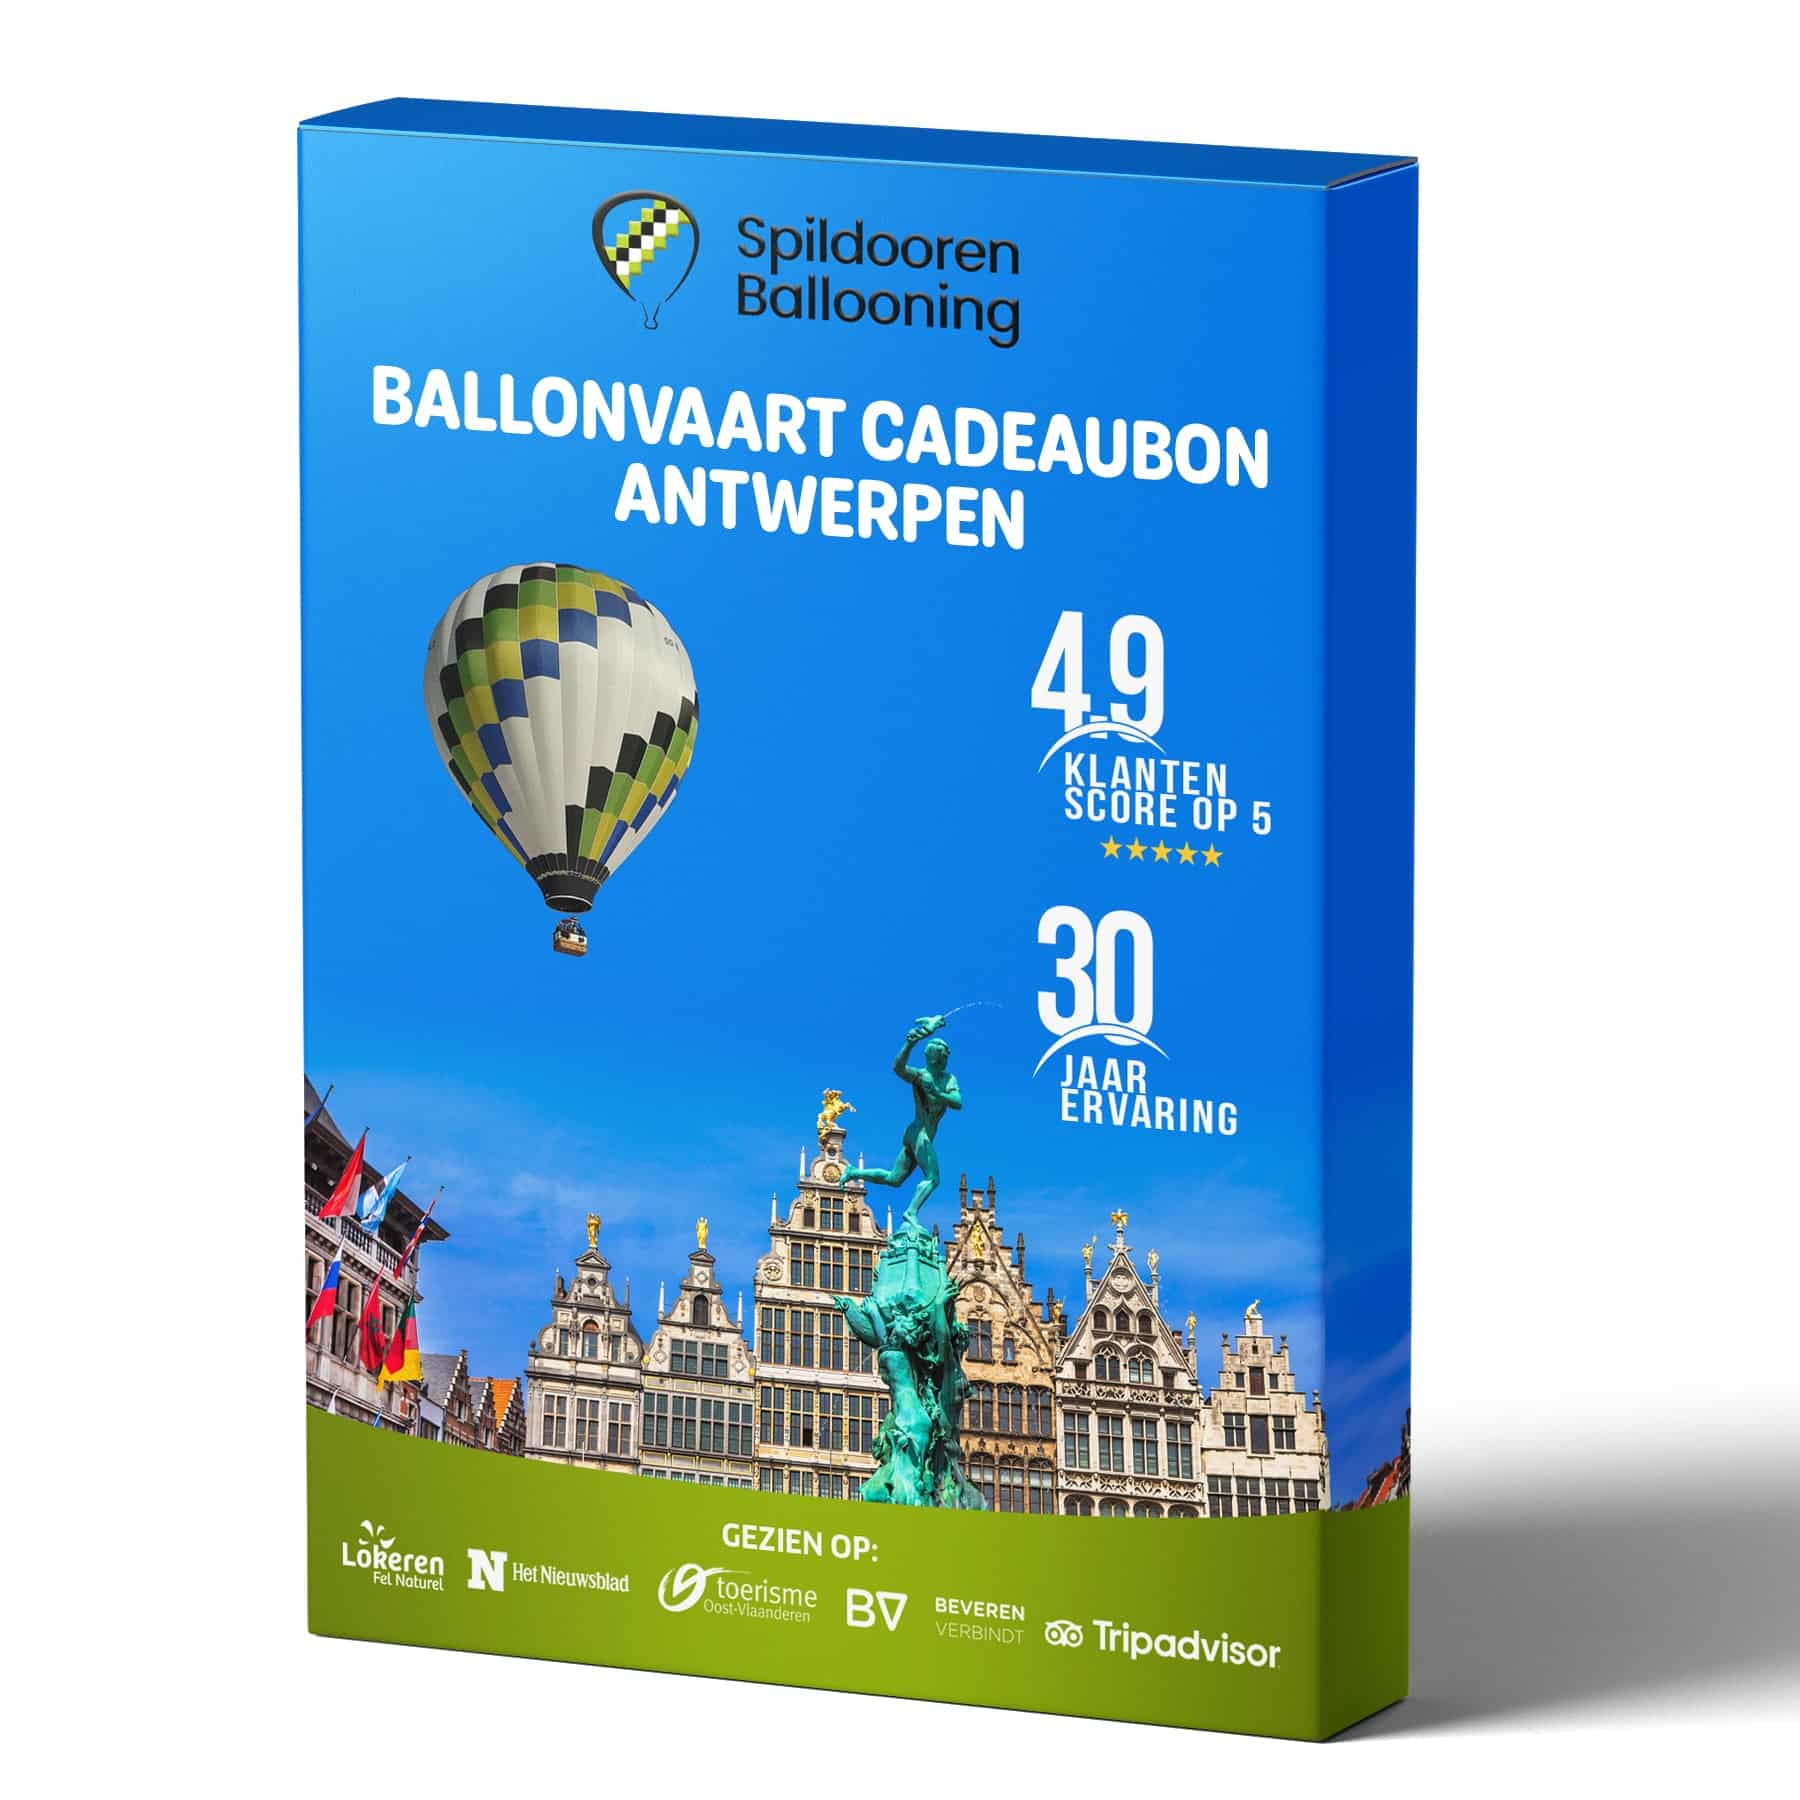 Duwen Eigendom biografie Ballonvaart cadeau Antwerpen? Cadeaubon vanaf €149,- per persoon‎